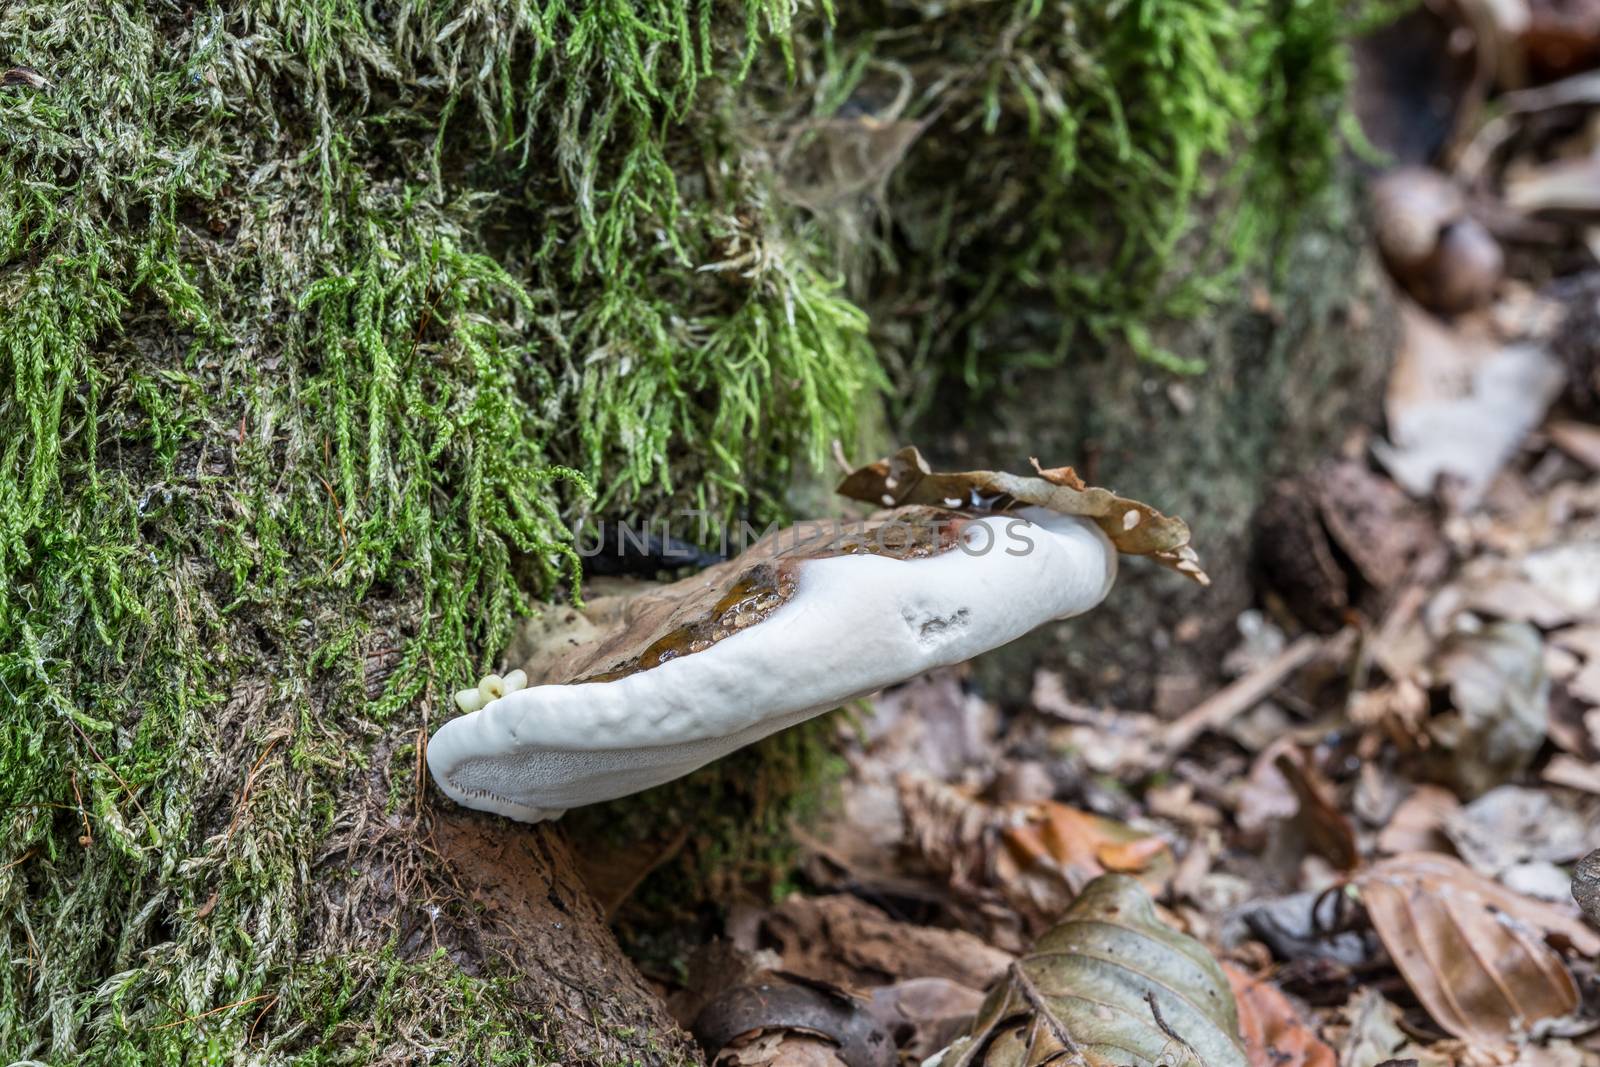 decomposed mushroom on dead tree trunk by Dr-Lange